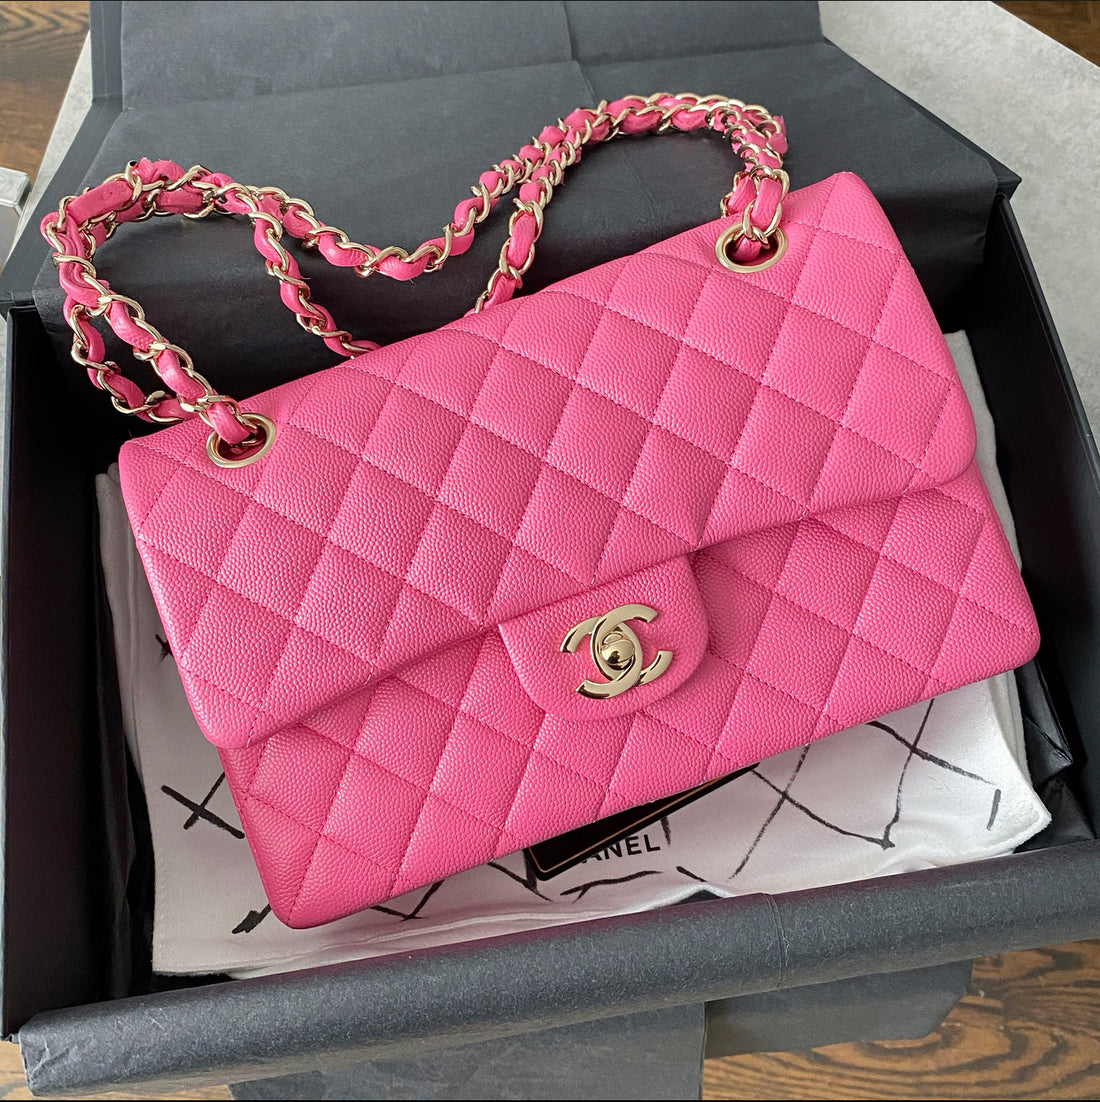 pink classic flap chanel bag